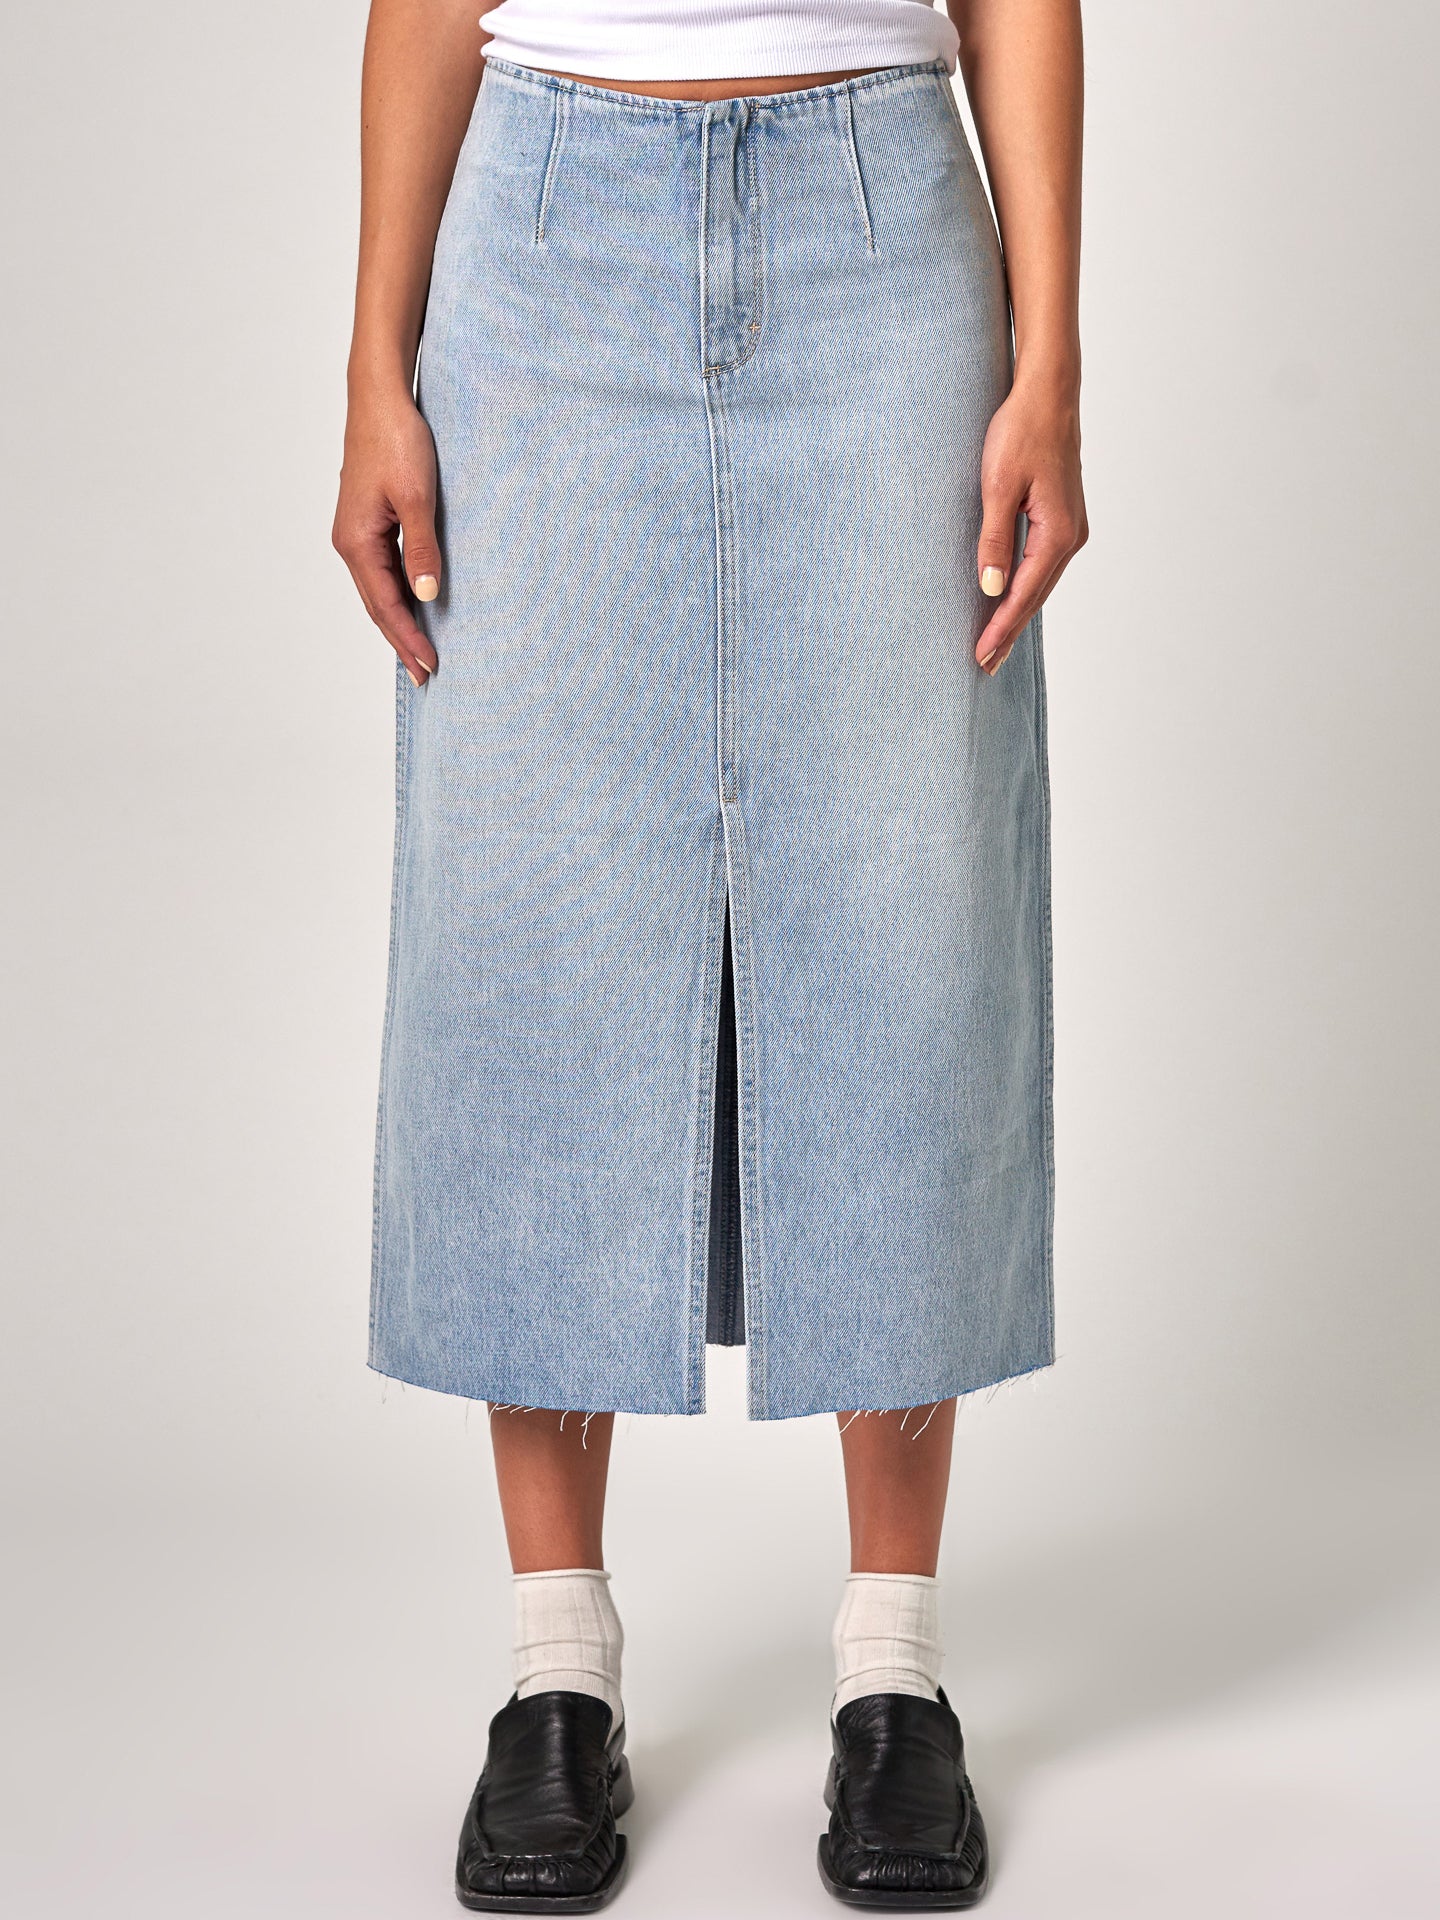 Recut Maxi Denim Skirt in Light Vintage Indigo Blue - Glue Store